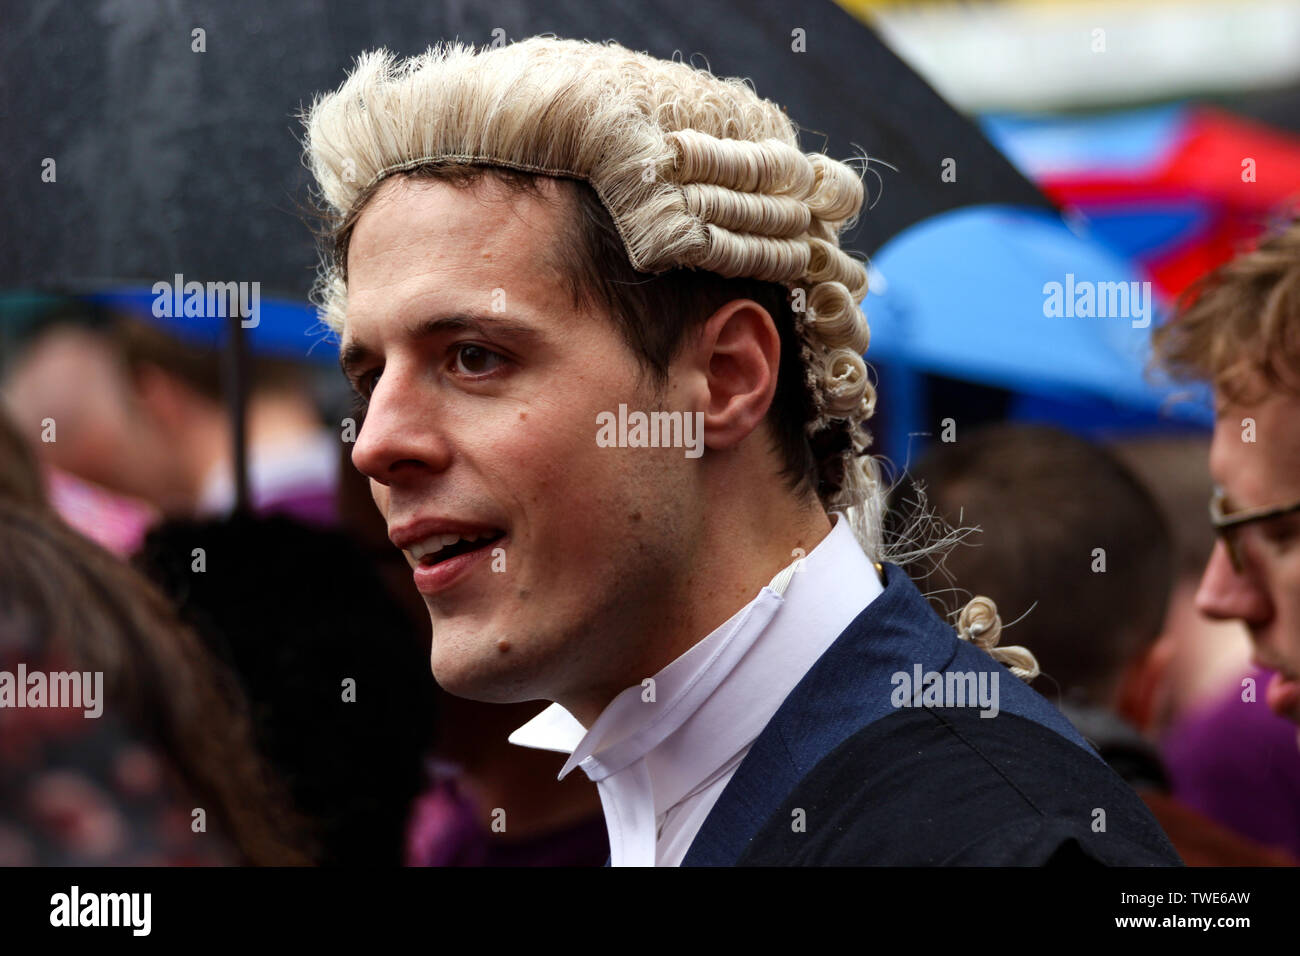 Uomo con parrucca in Pride a London Parade 2014 a Londra, Inghilterra Foto Stock